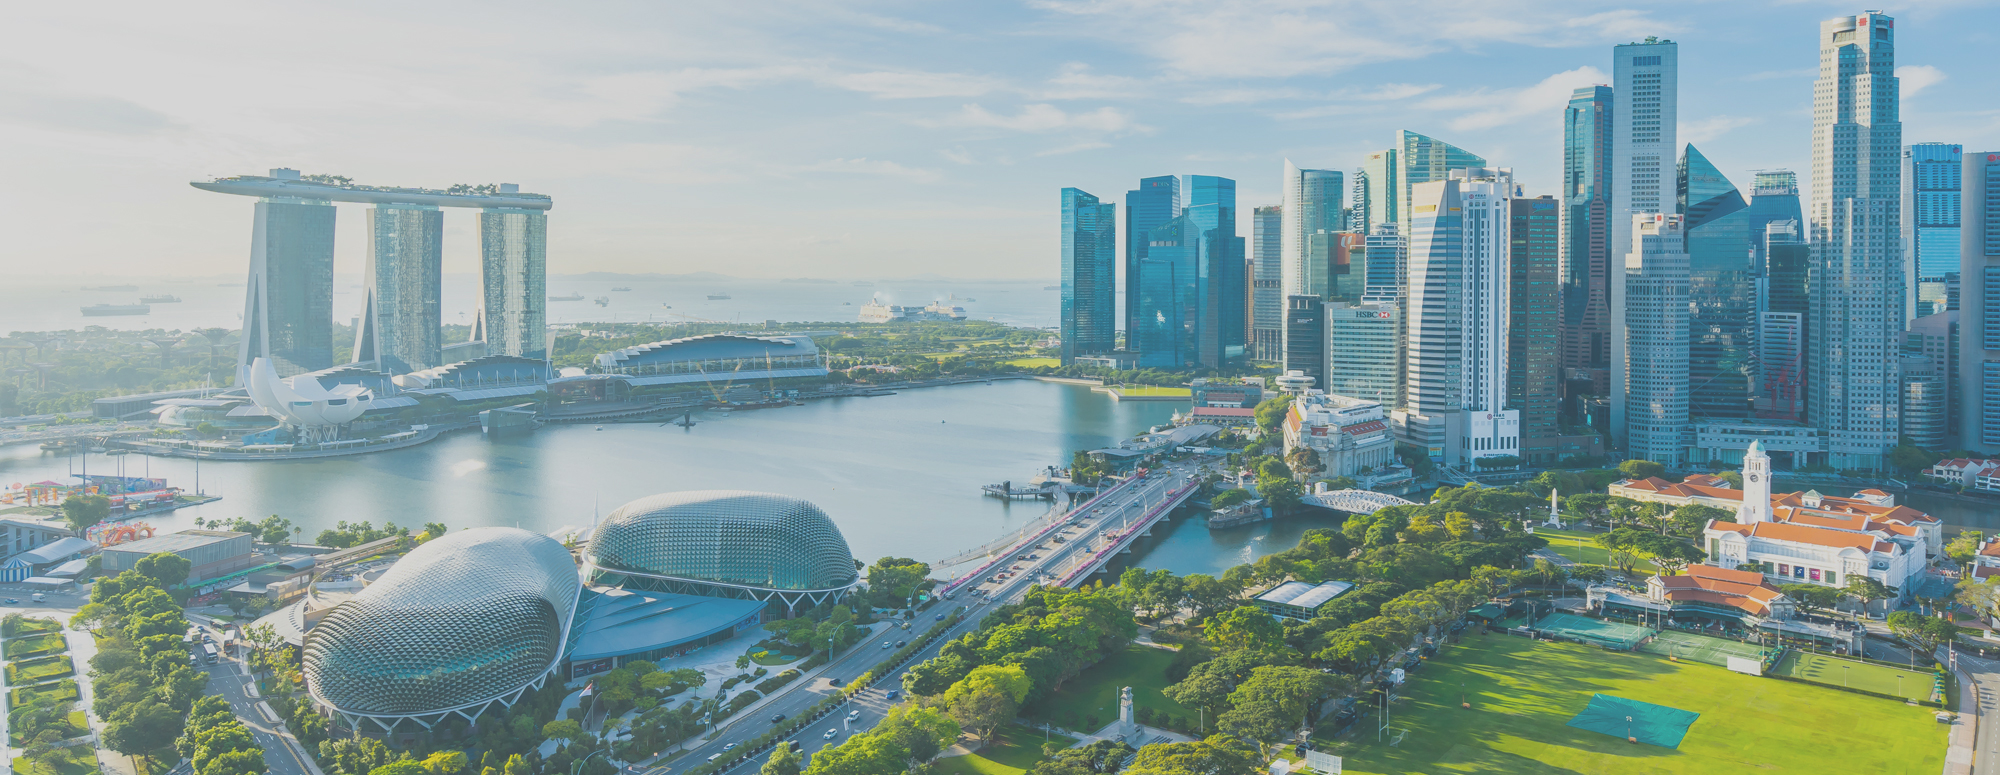 Home - Singapore Sustainable Finance Association